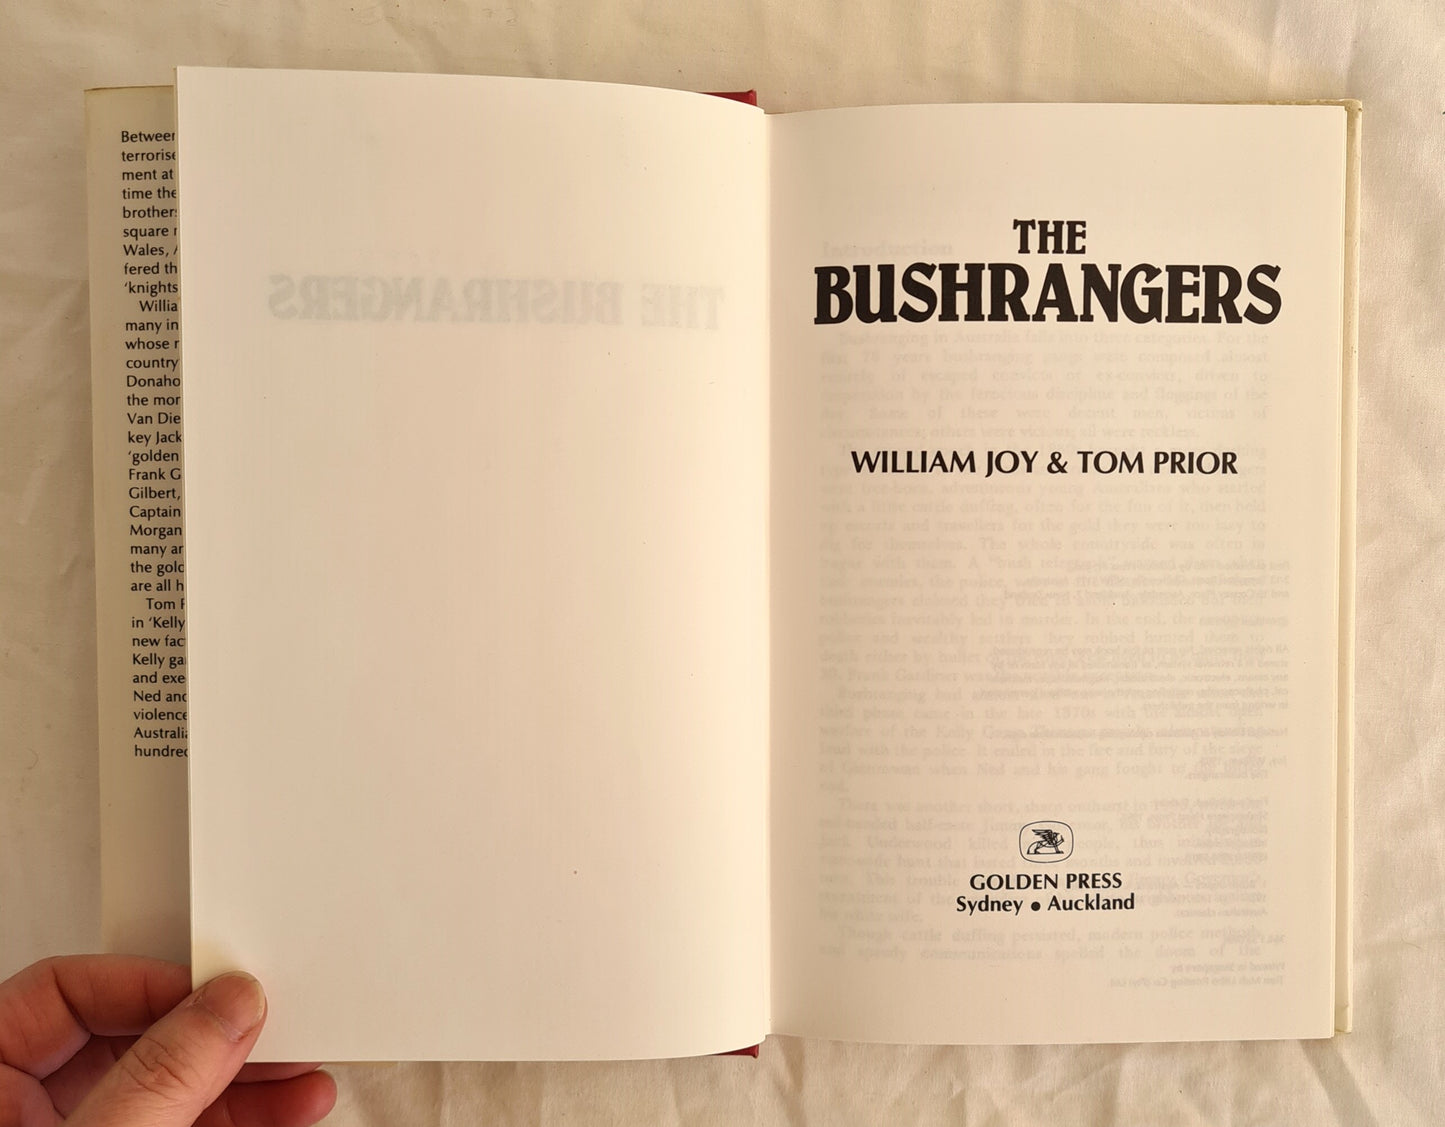 The Bushrangers by William Joy and Tom Prior